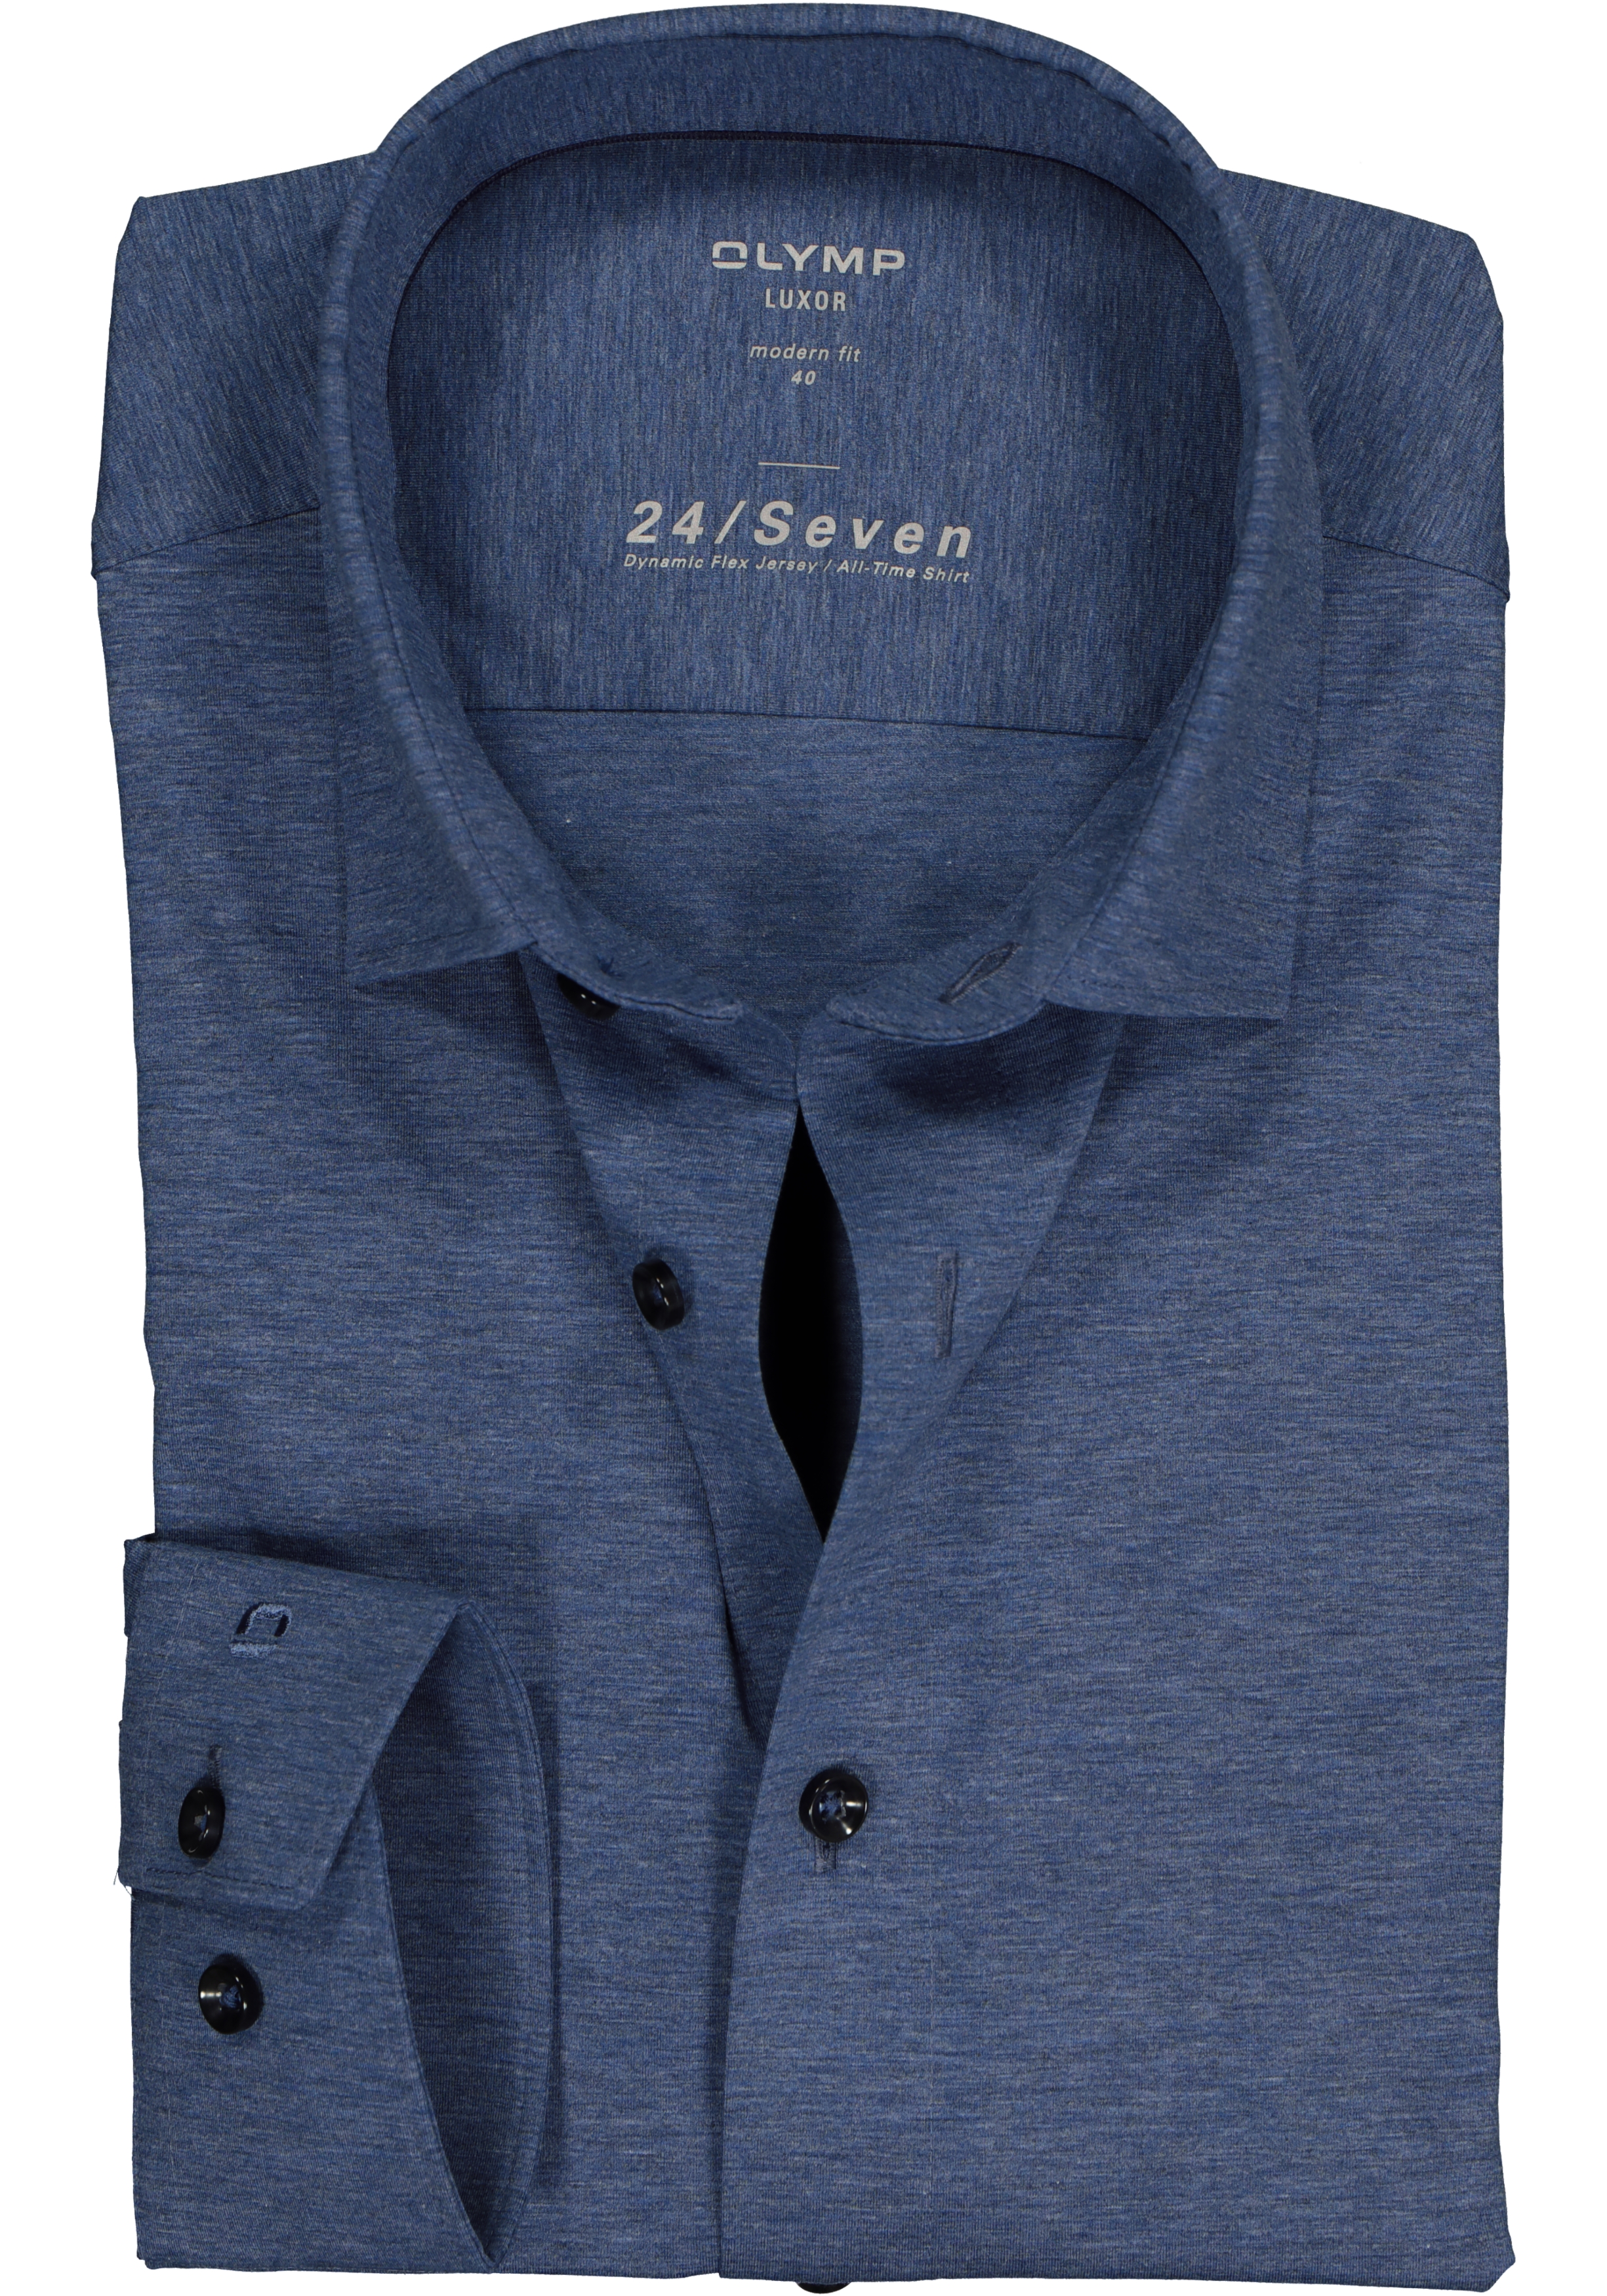 OLYMP Luxor 24/Seven modern fit overhemd, rookblauw tricot